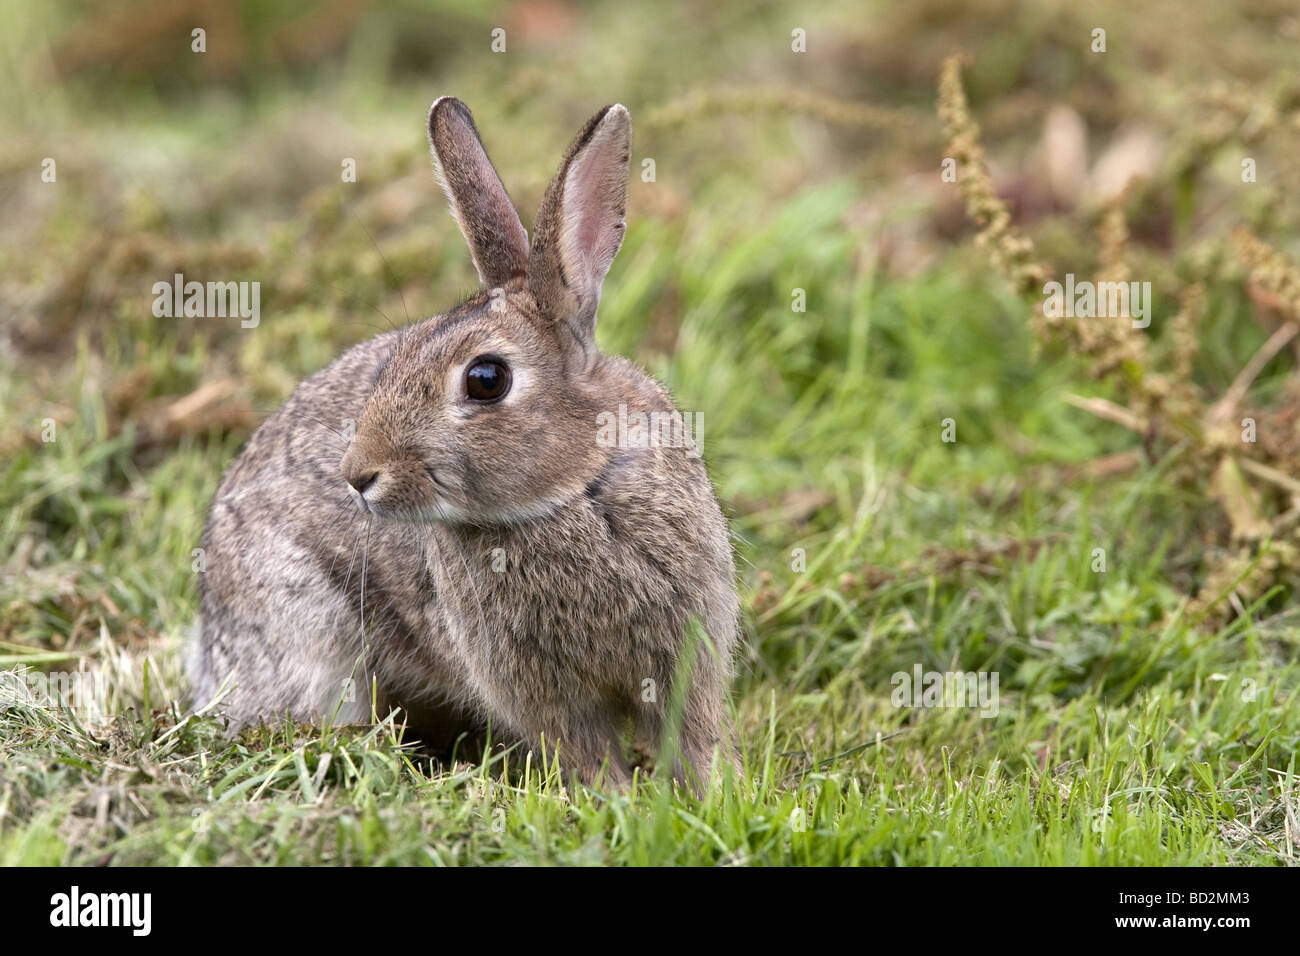 Young Wild Rabbit - Oryctolagus cuniculus Stock Photo